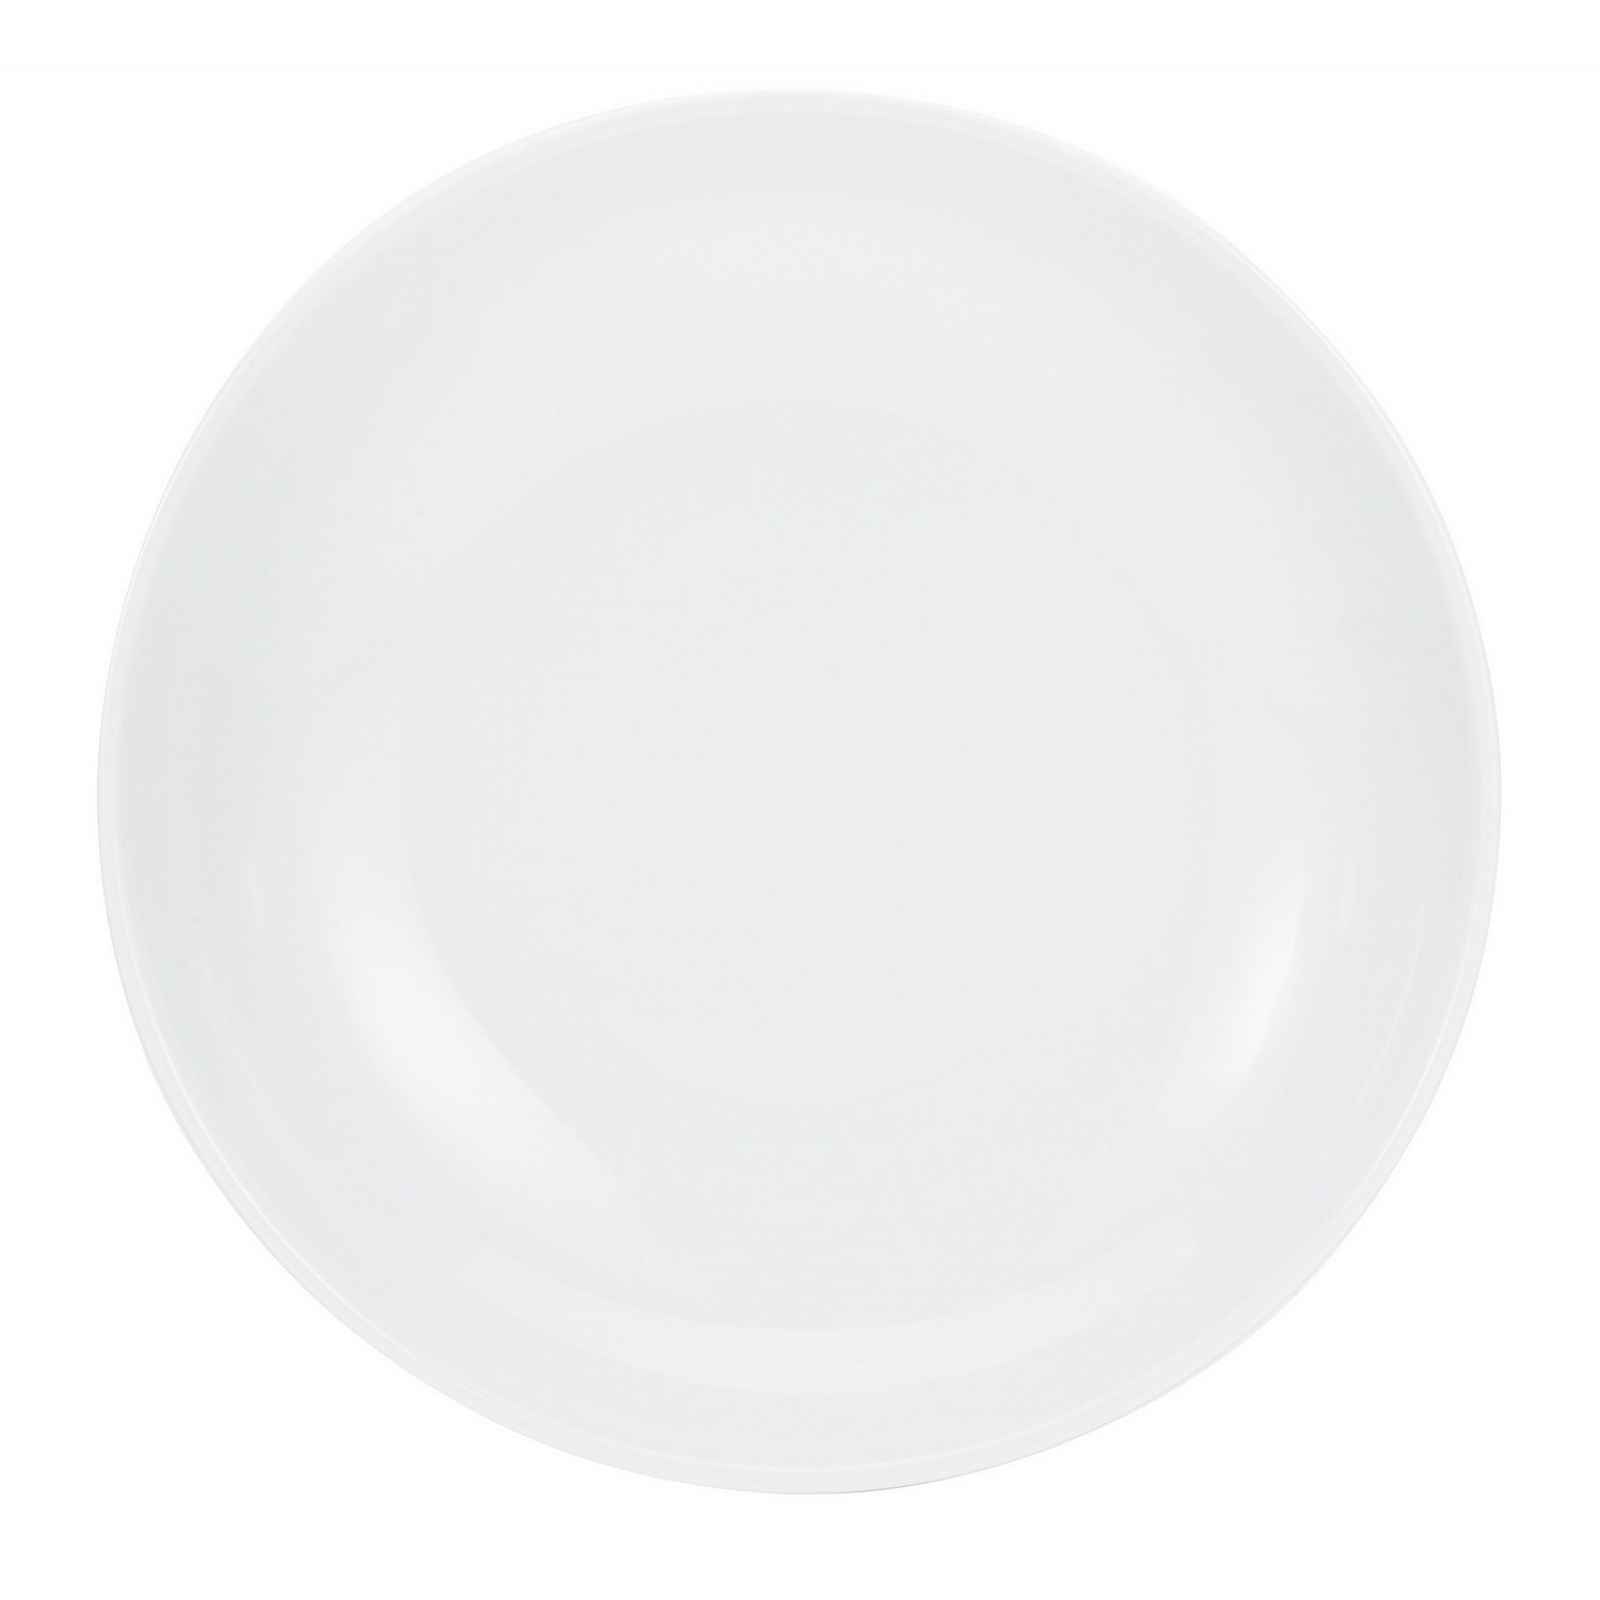 Hluboký talíř Bistrot 23 cm, bílý